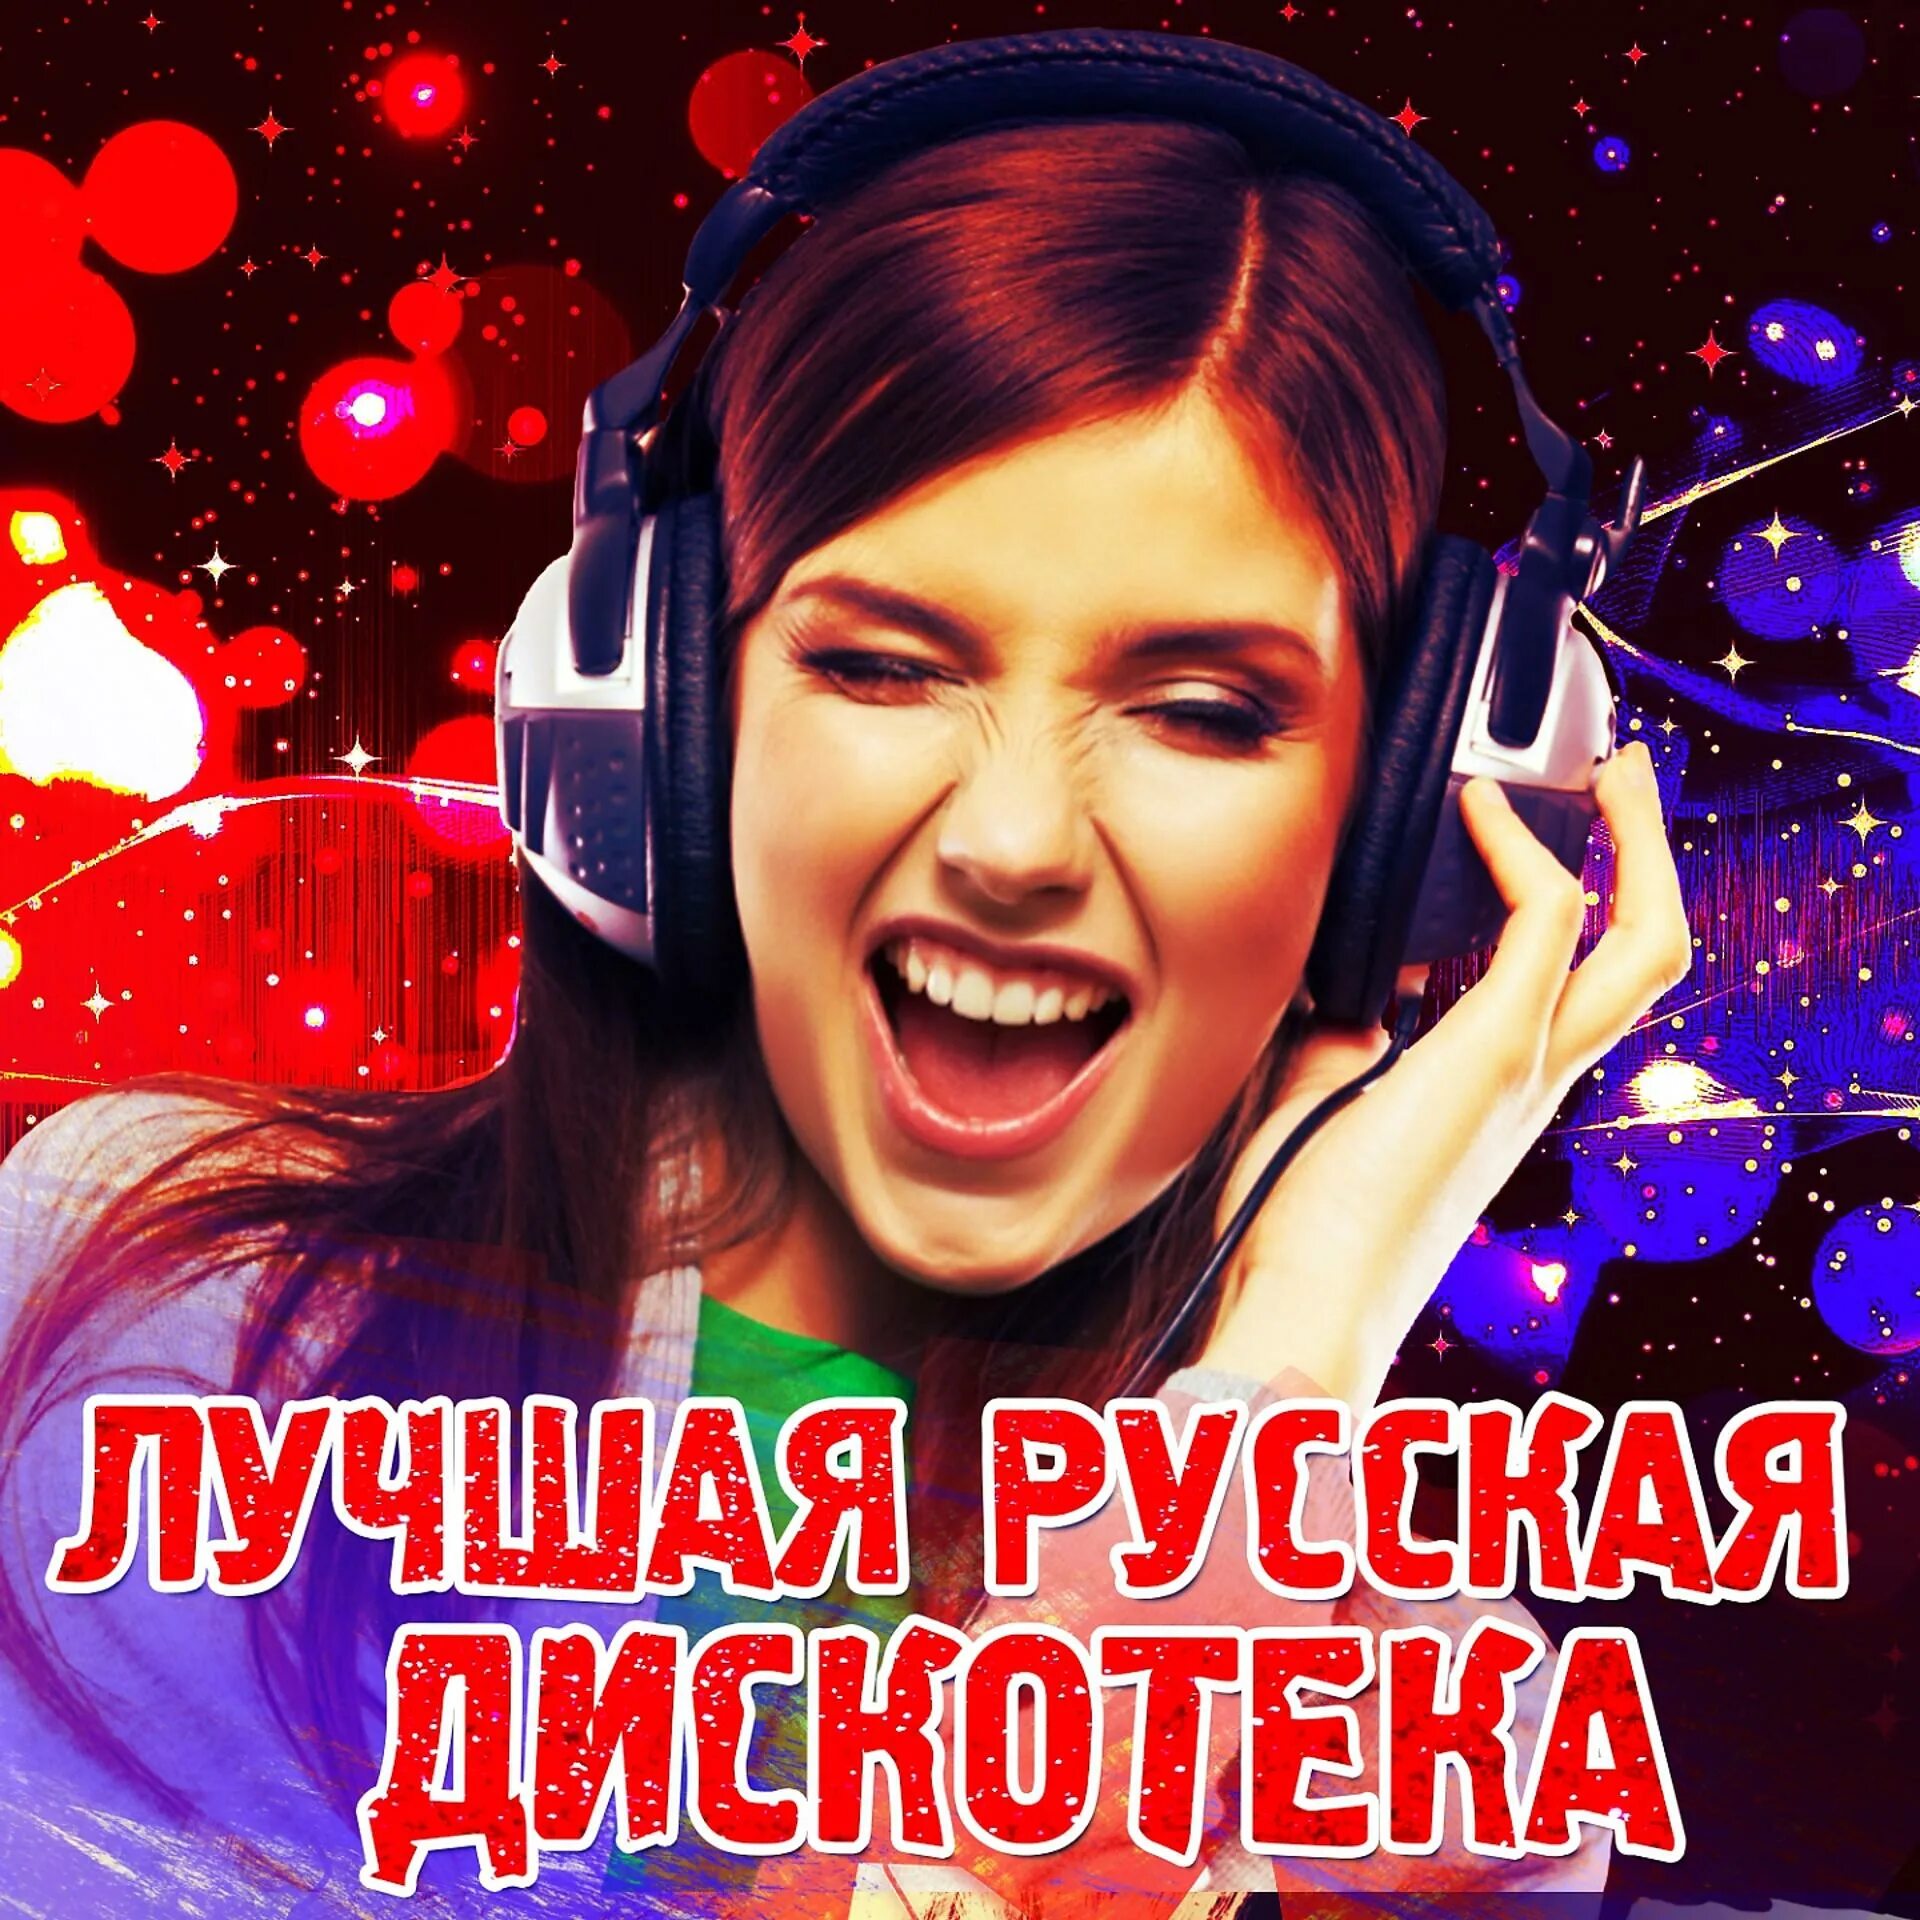 Музыка веселая русская хорошая